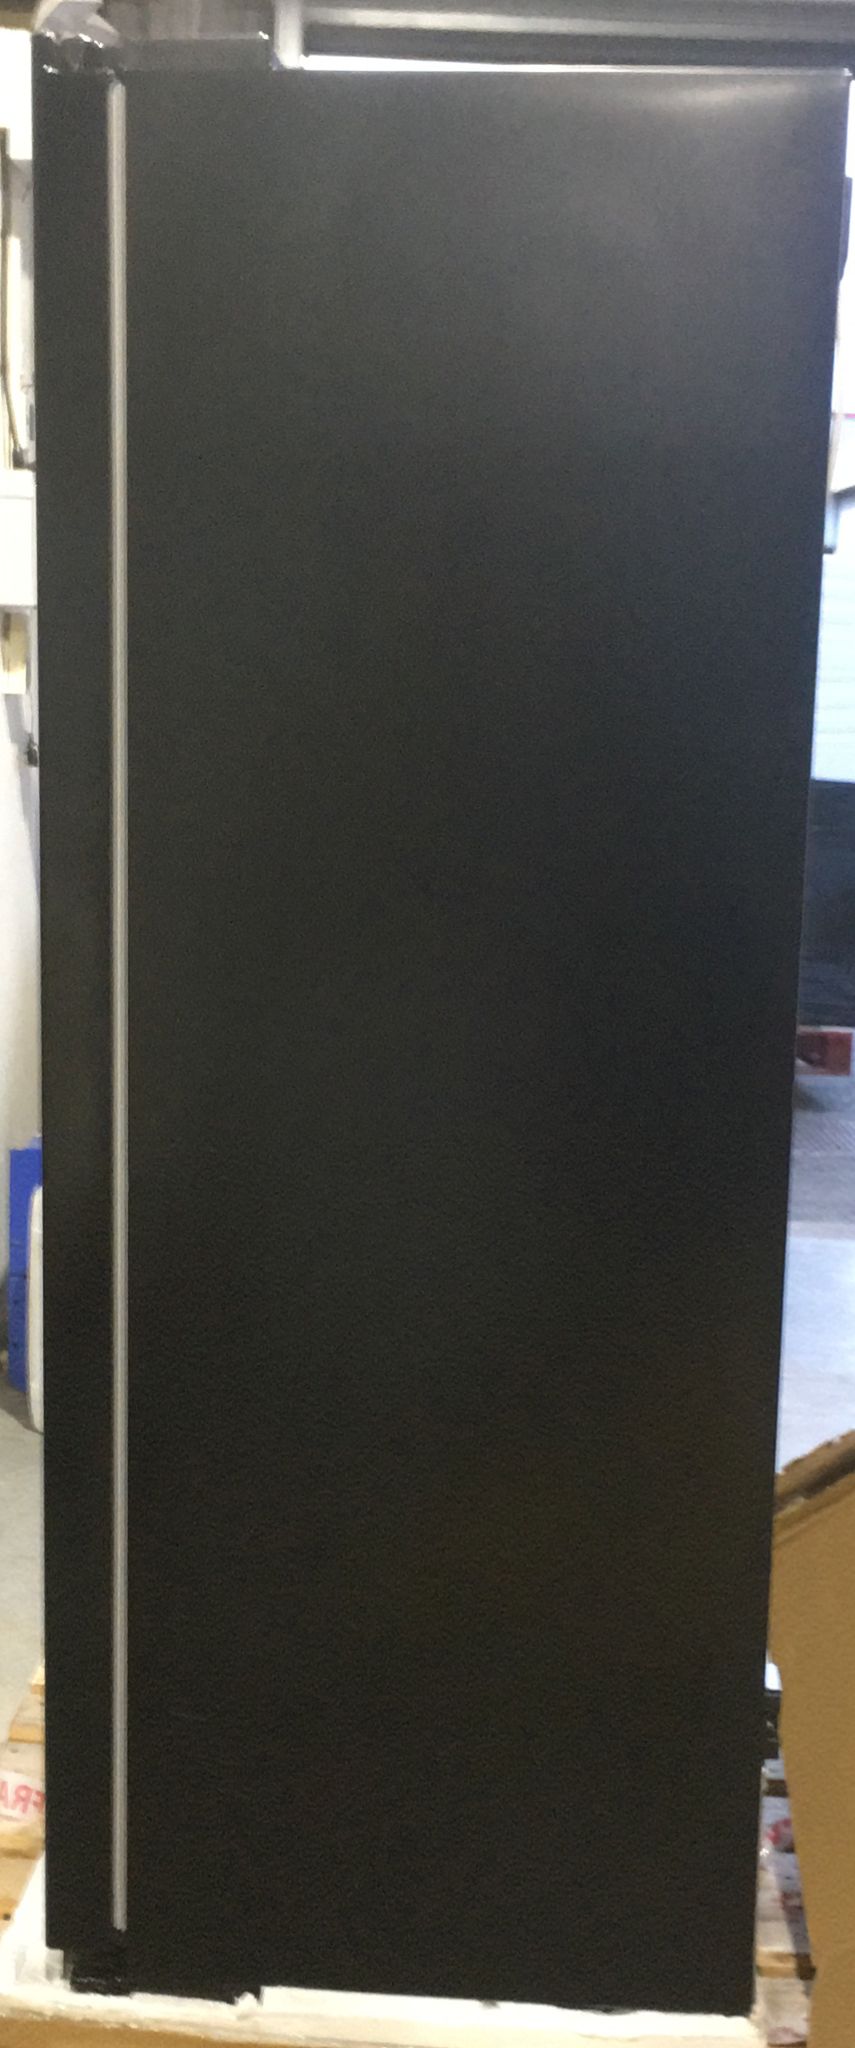 Bosch-Fridge Freezer Black-Serie 6-KAD93VBFPG-X-Display 0893